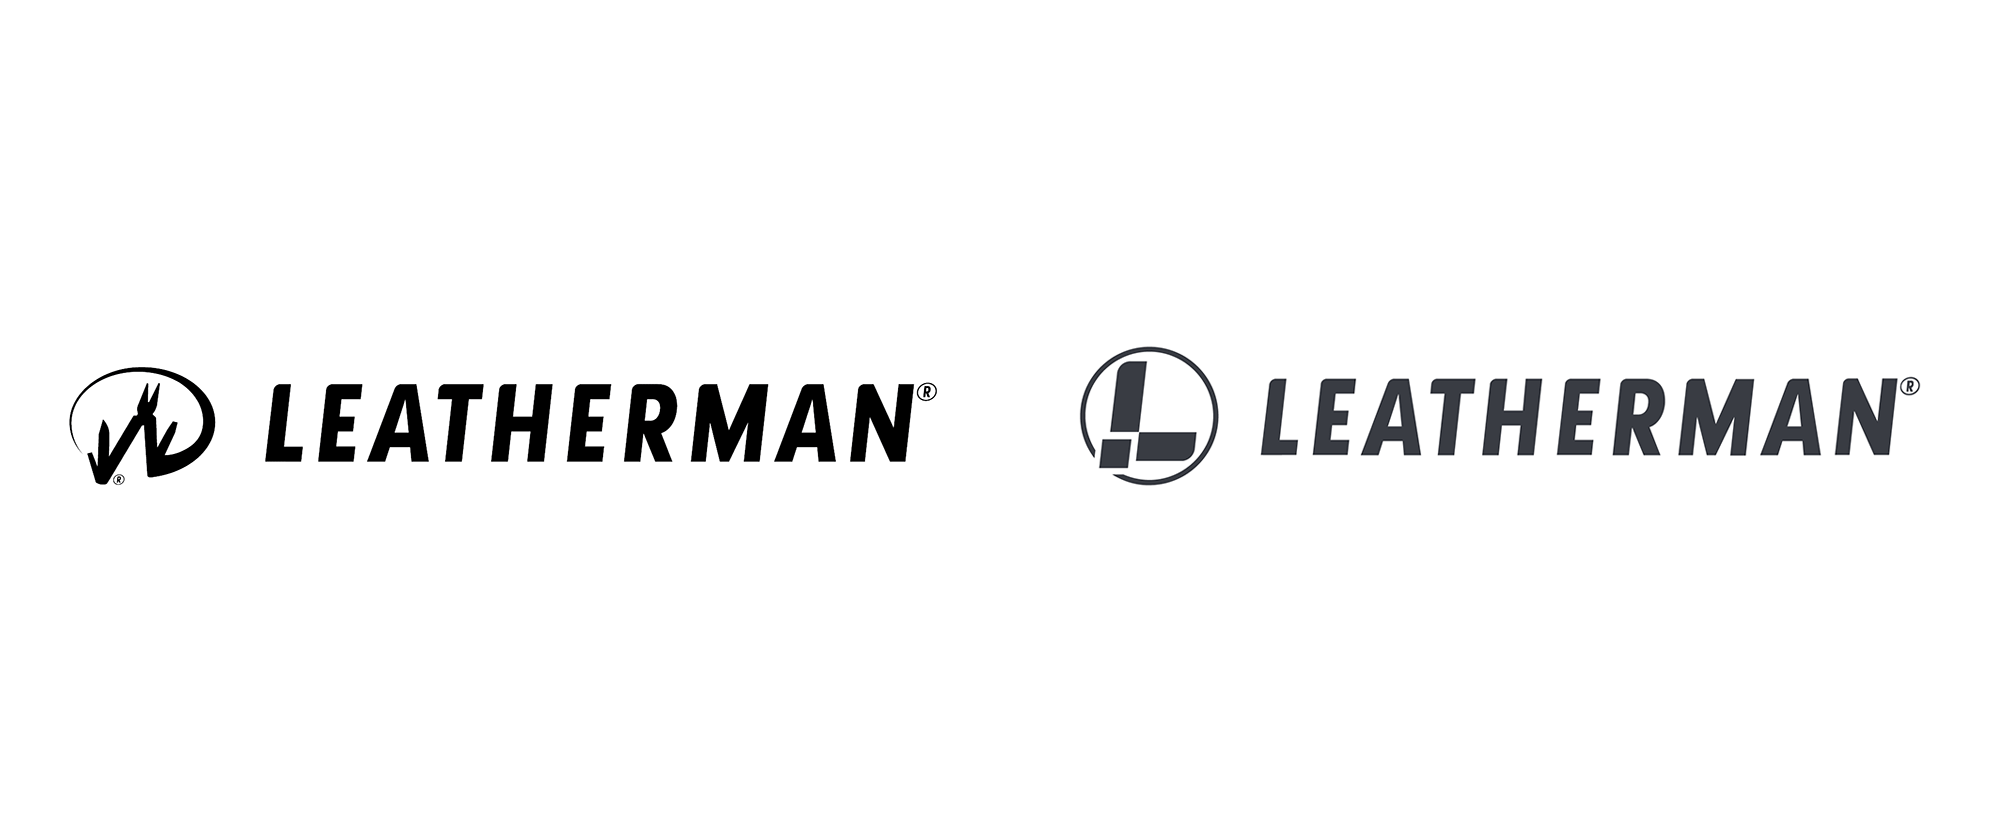 Leatherman Logo - Brand New: New Logo for Leatherman